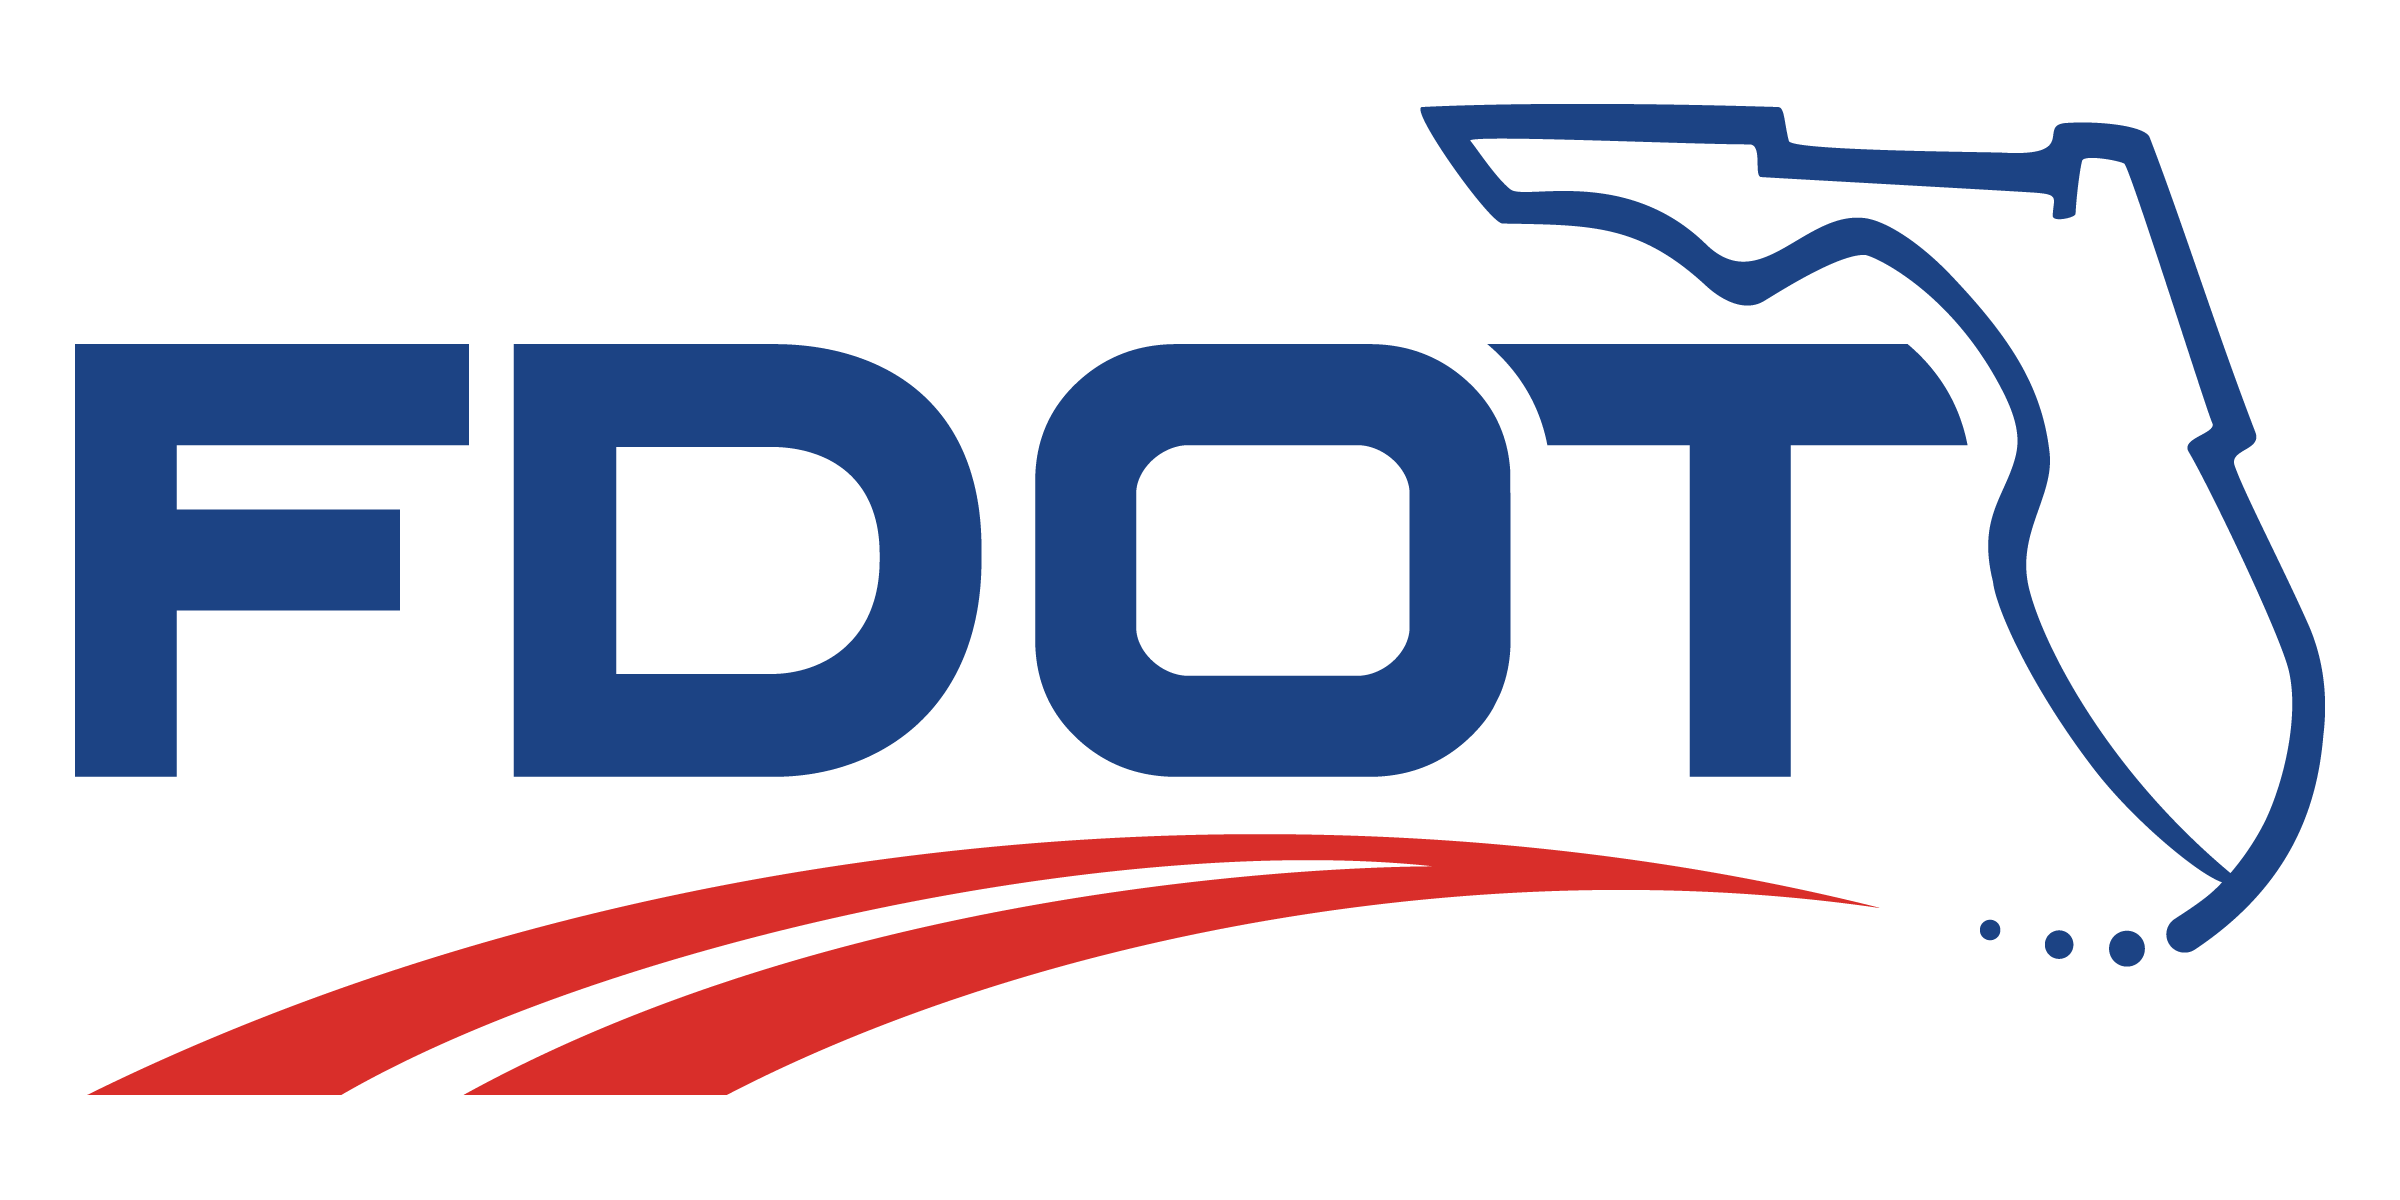 FDOT logo.